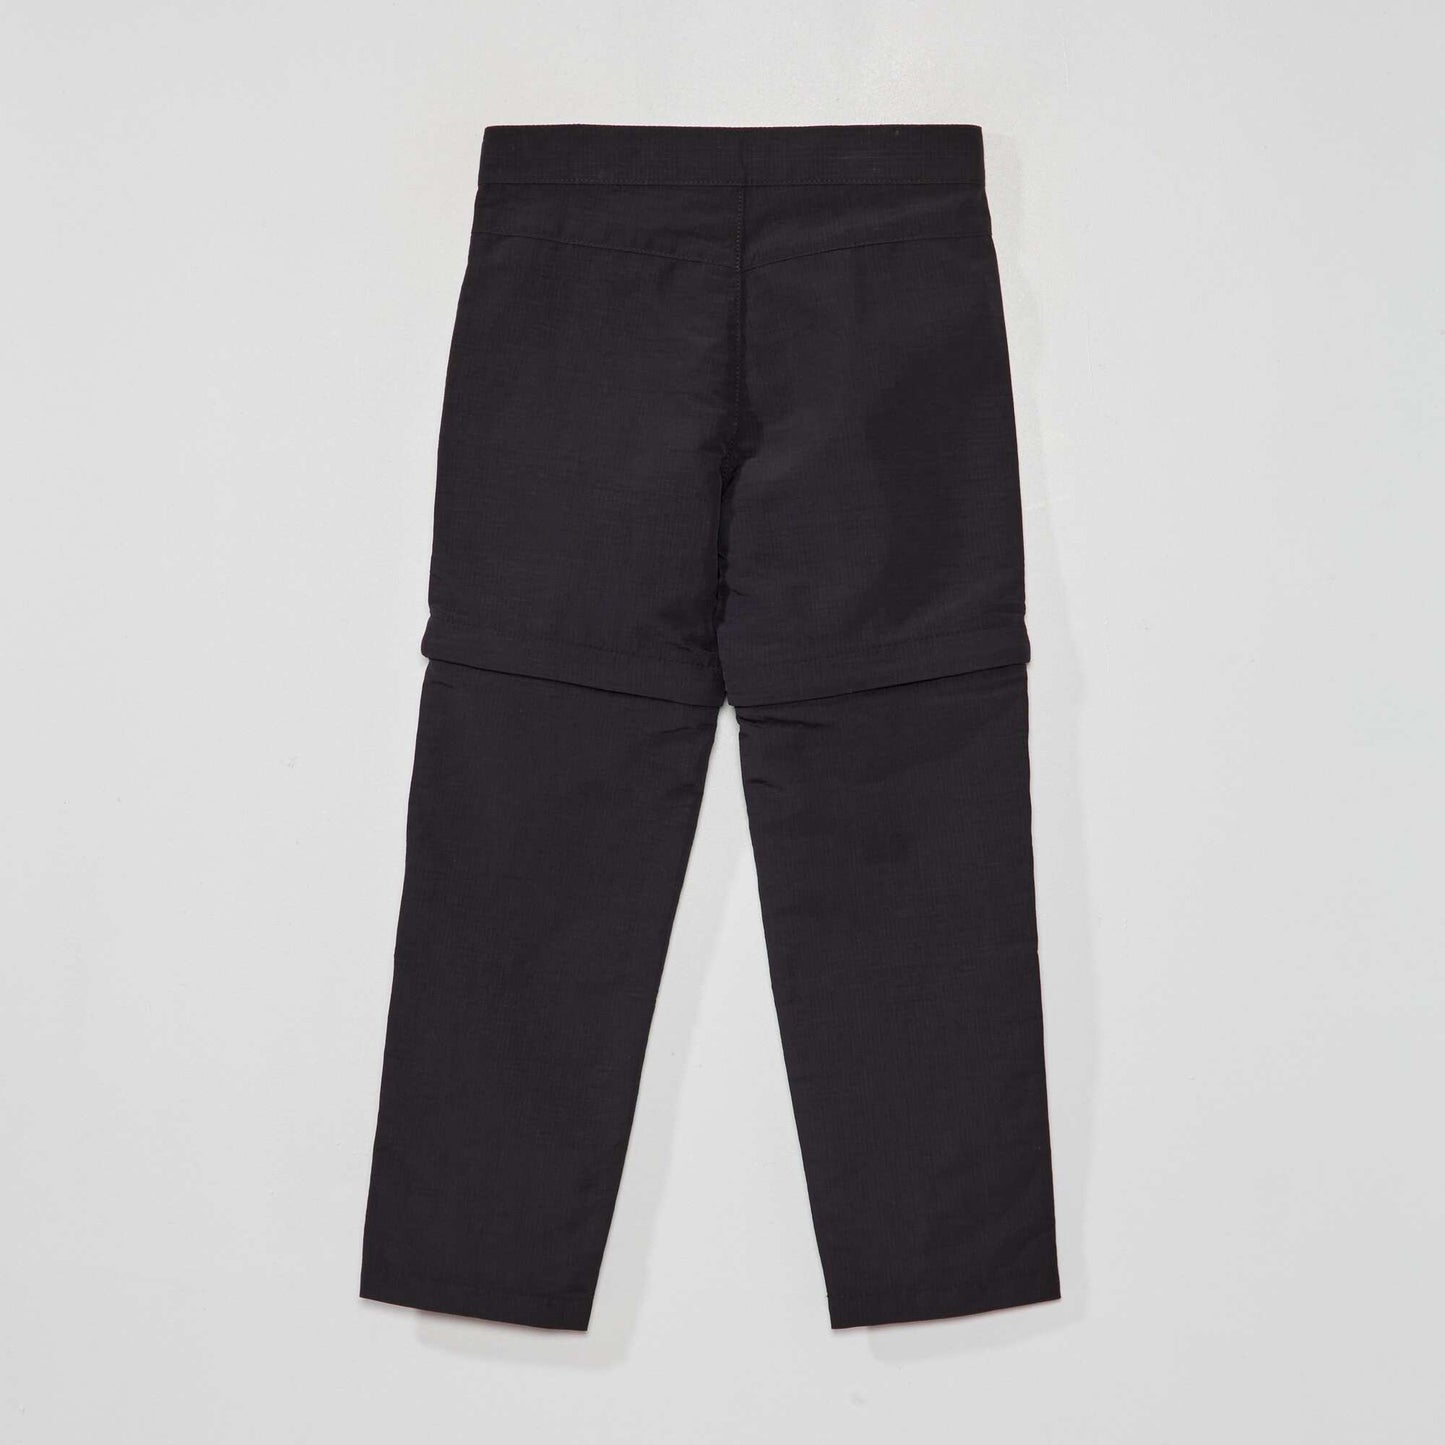 Pantalon/short 2 en 1 noir